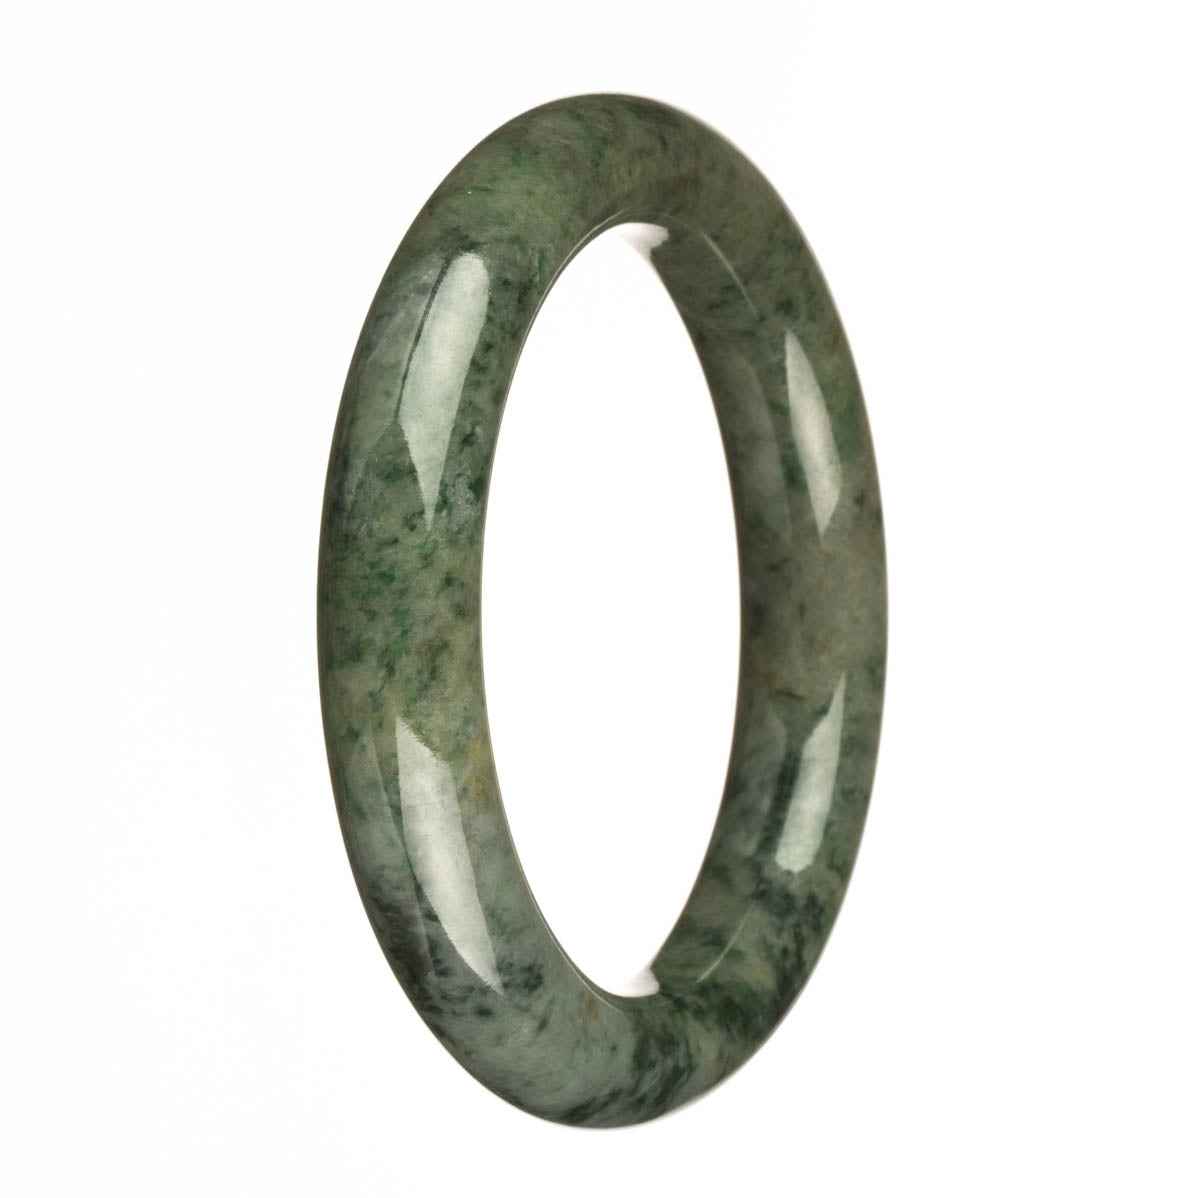 Real Type A Dark Green with Apple Green Patterns Jadeite Jade Bangle Bracelet - 61mm Petite Round